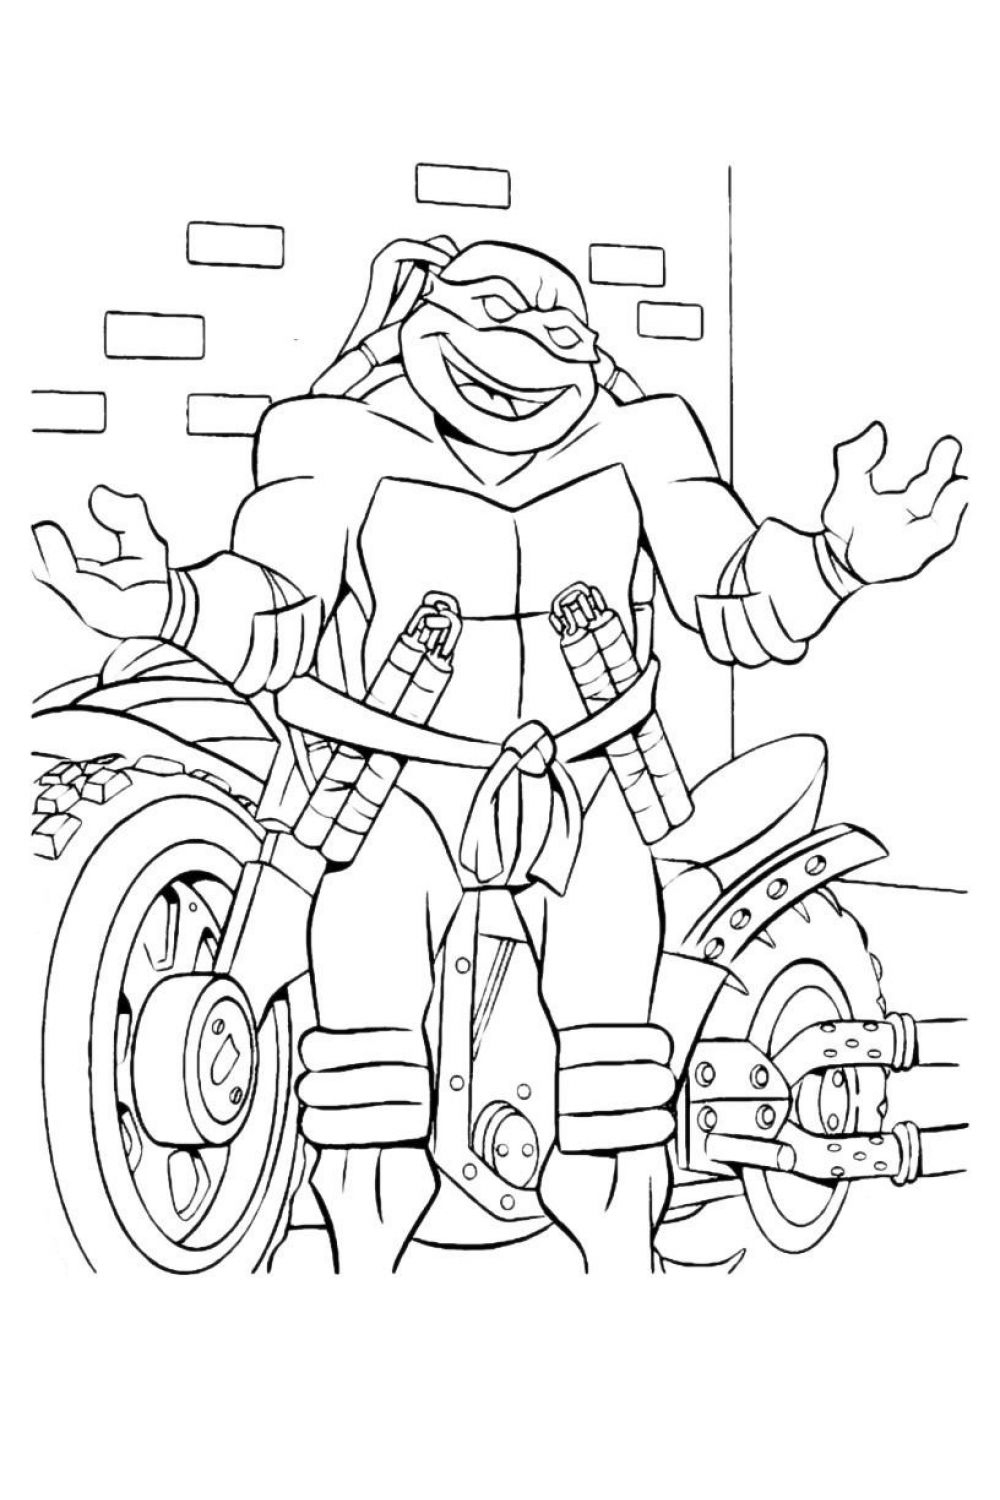 Ausmalbilder Ninja Turtles aus dem Cartoon.